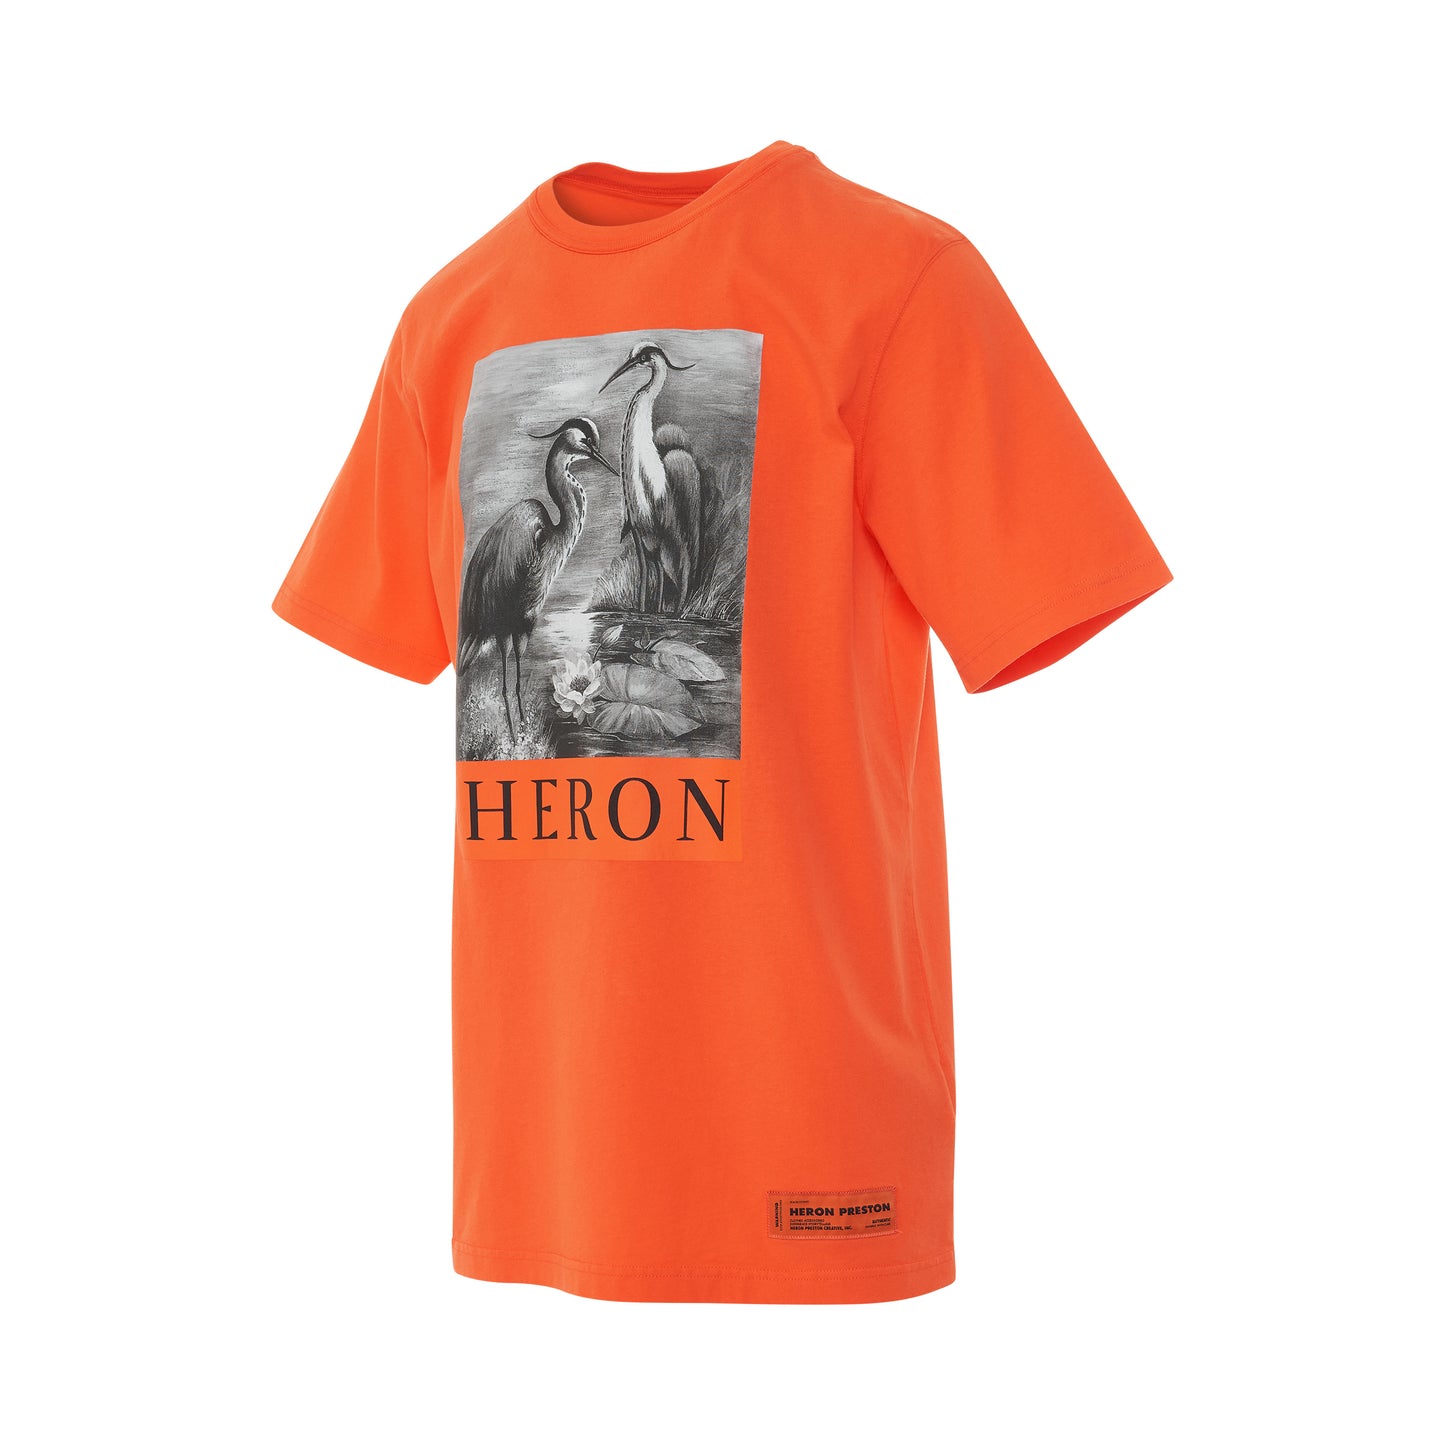 Heron BW Oversized T-Shirt in Orange